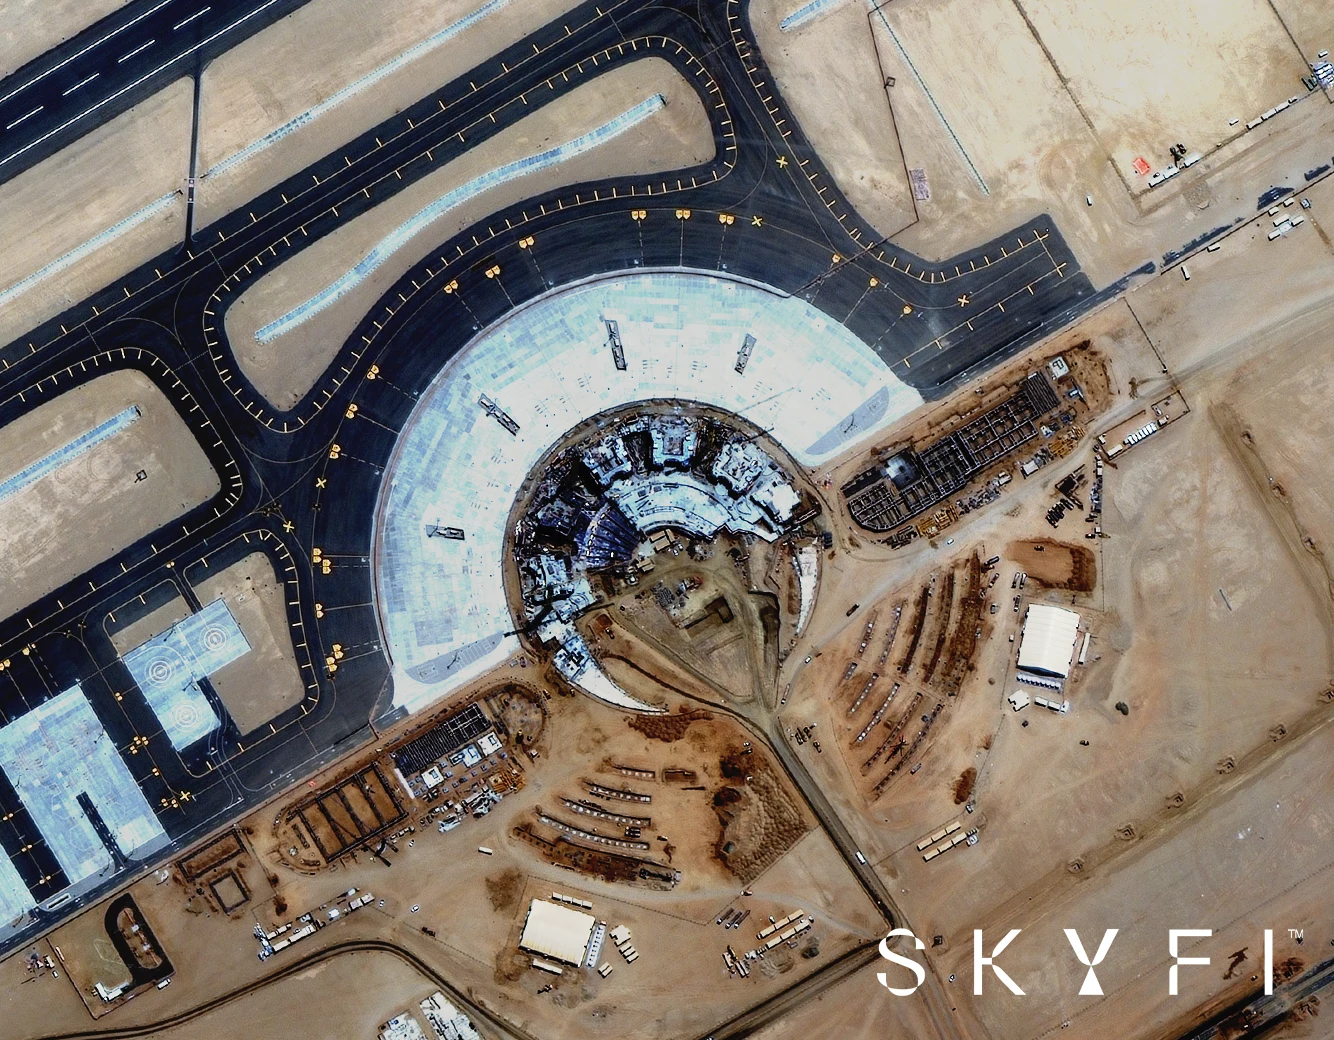 Red Sea International Airport – Terminal Development (50 cm image)